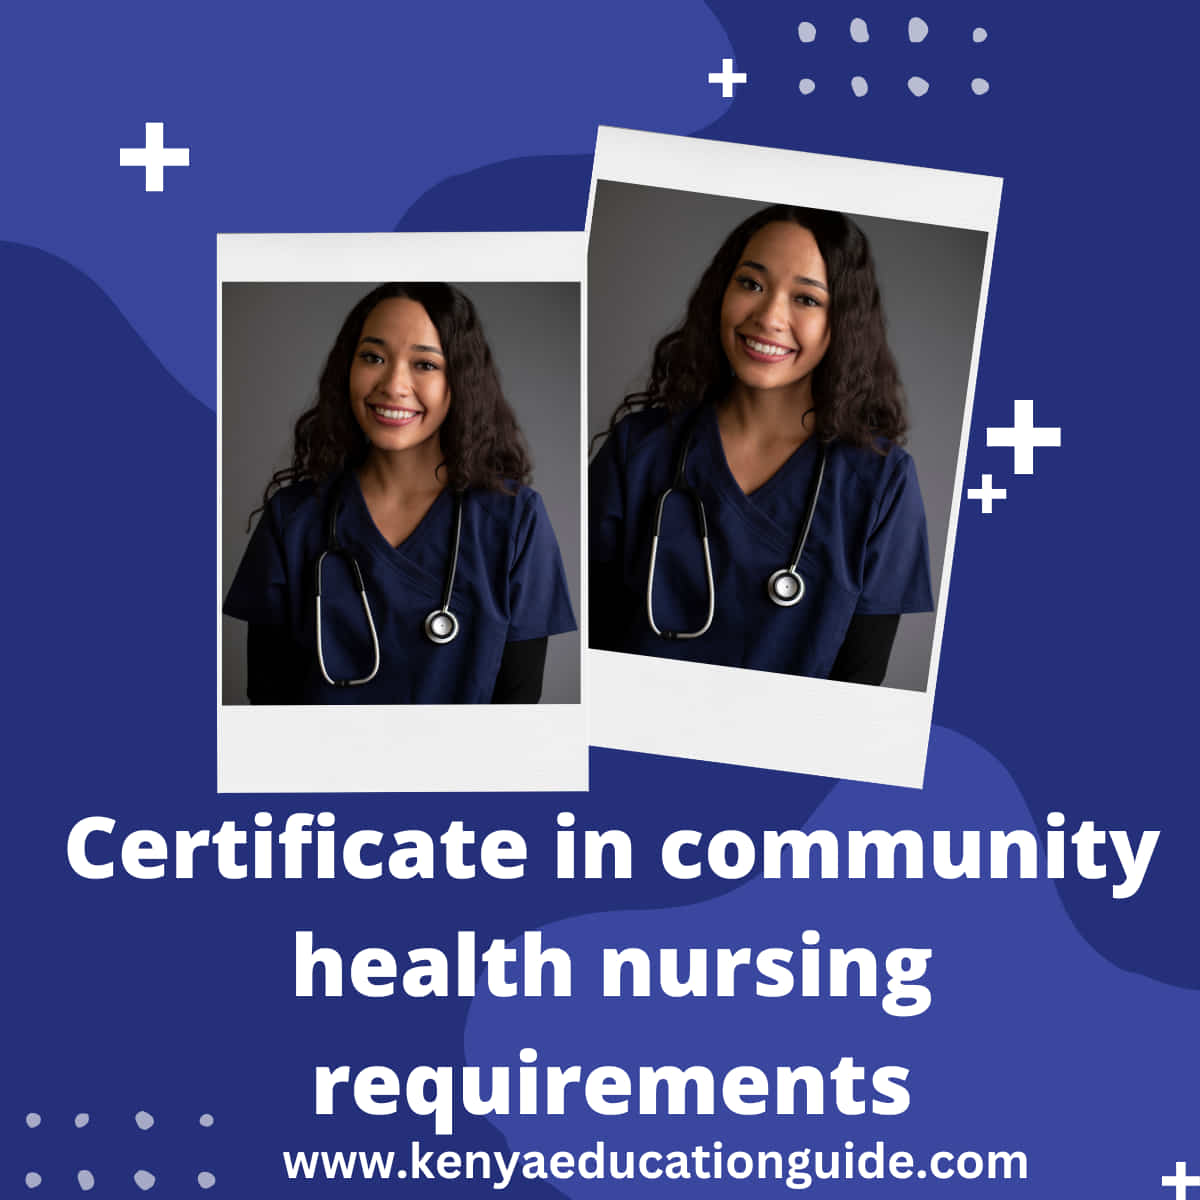 Certificate in community health nursing requirements